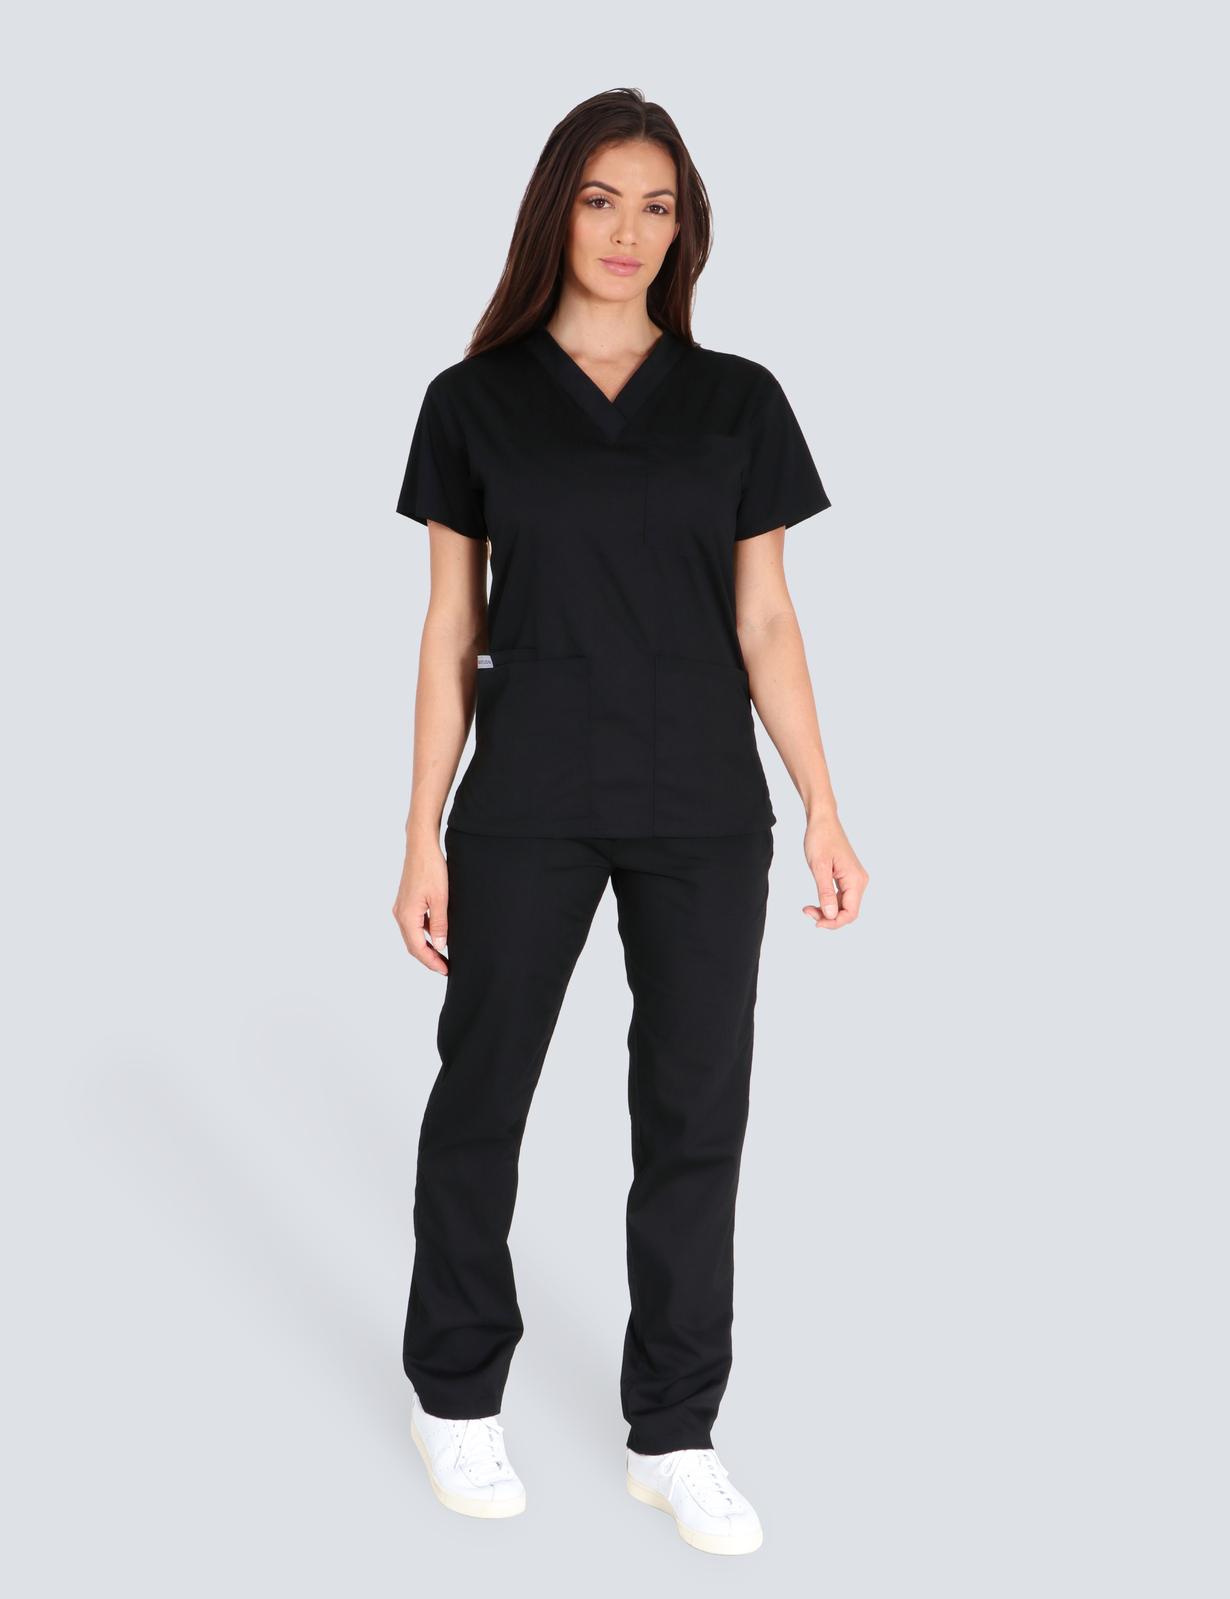 Logan Hospital - Medical Imaging Radiographer (4 Pocket Scrub Top and Cargo Pants incl Logos)